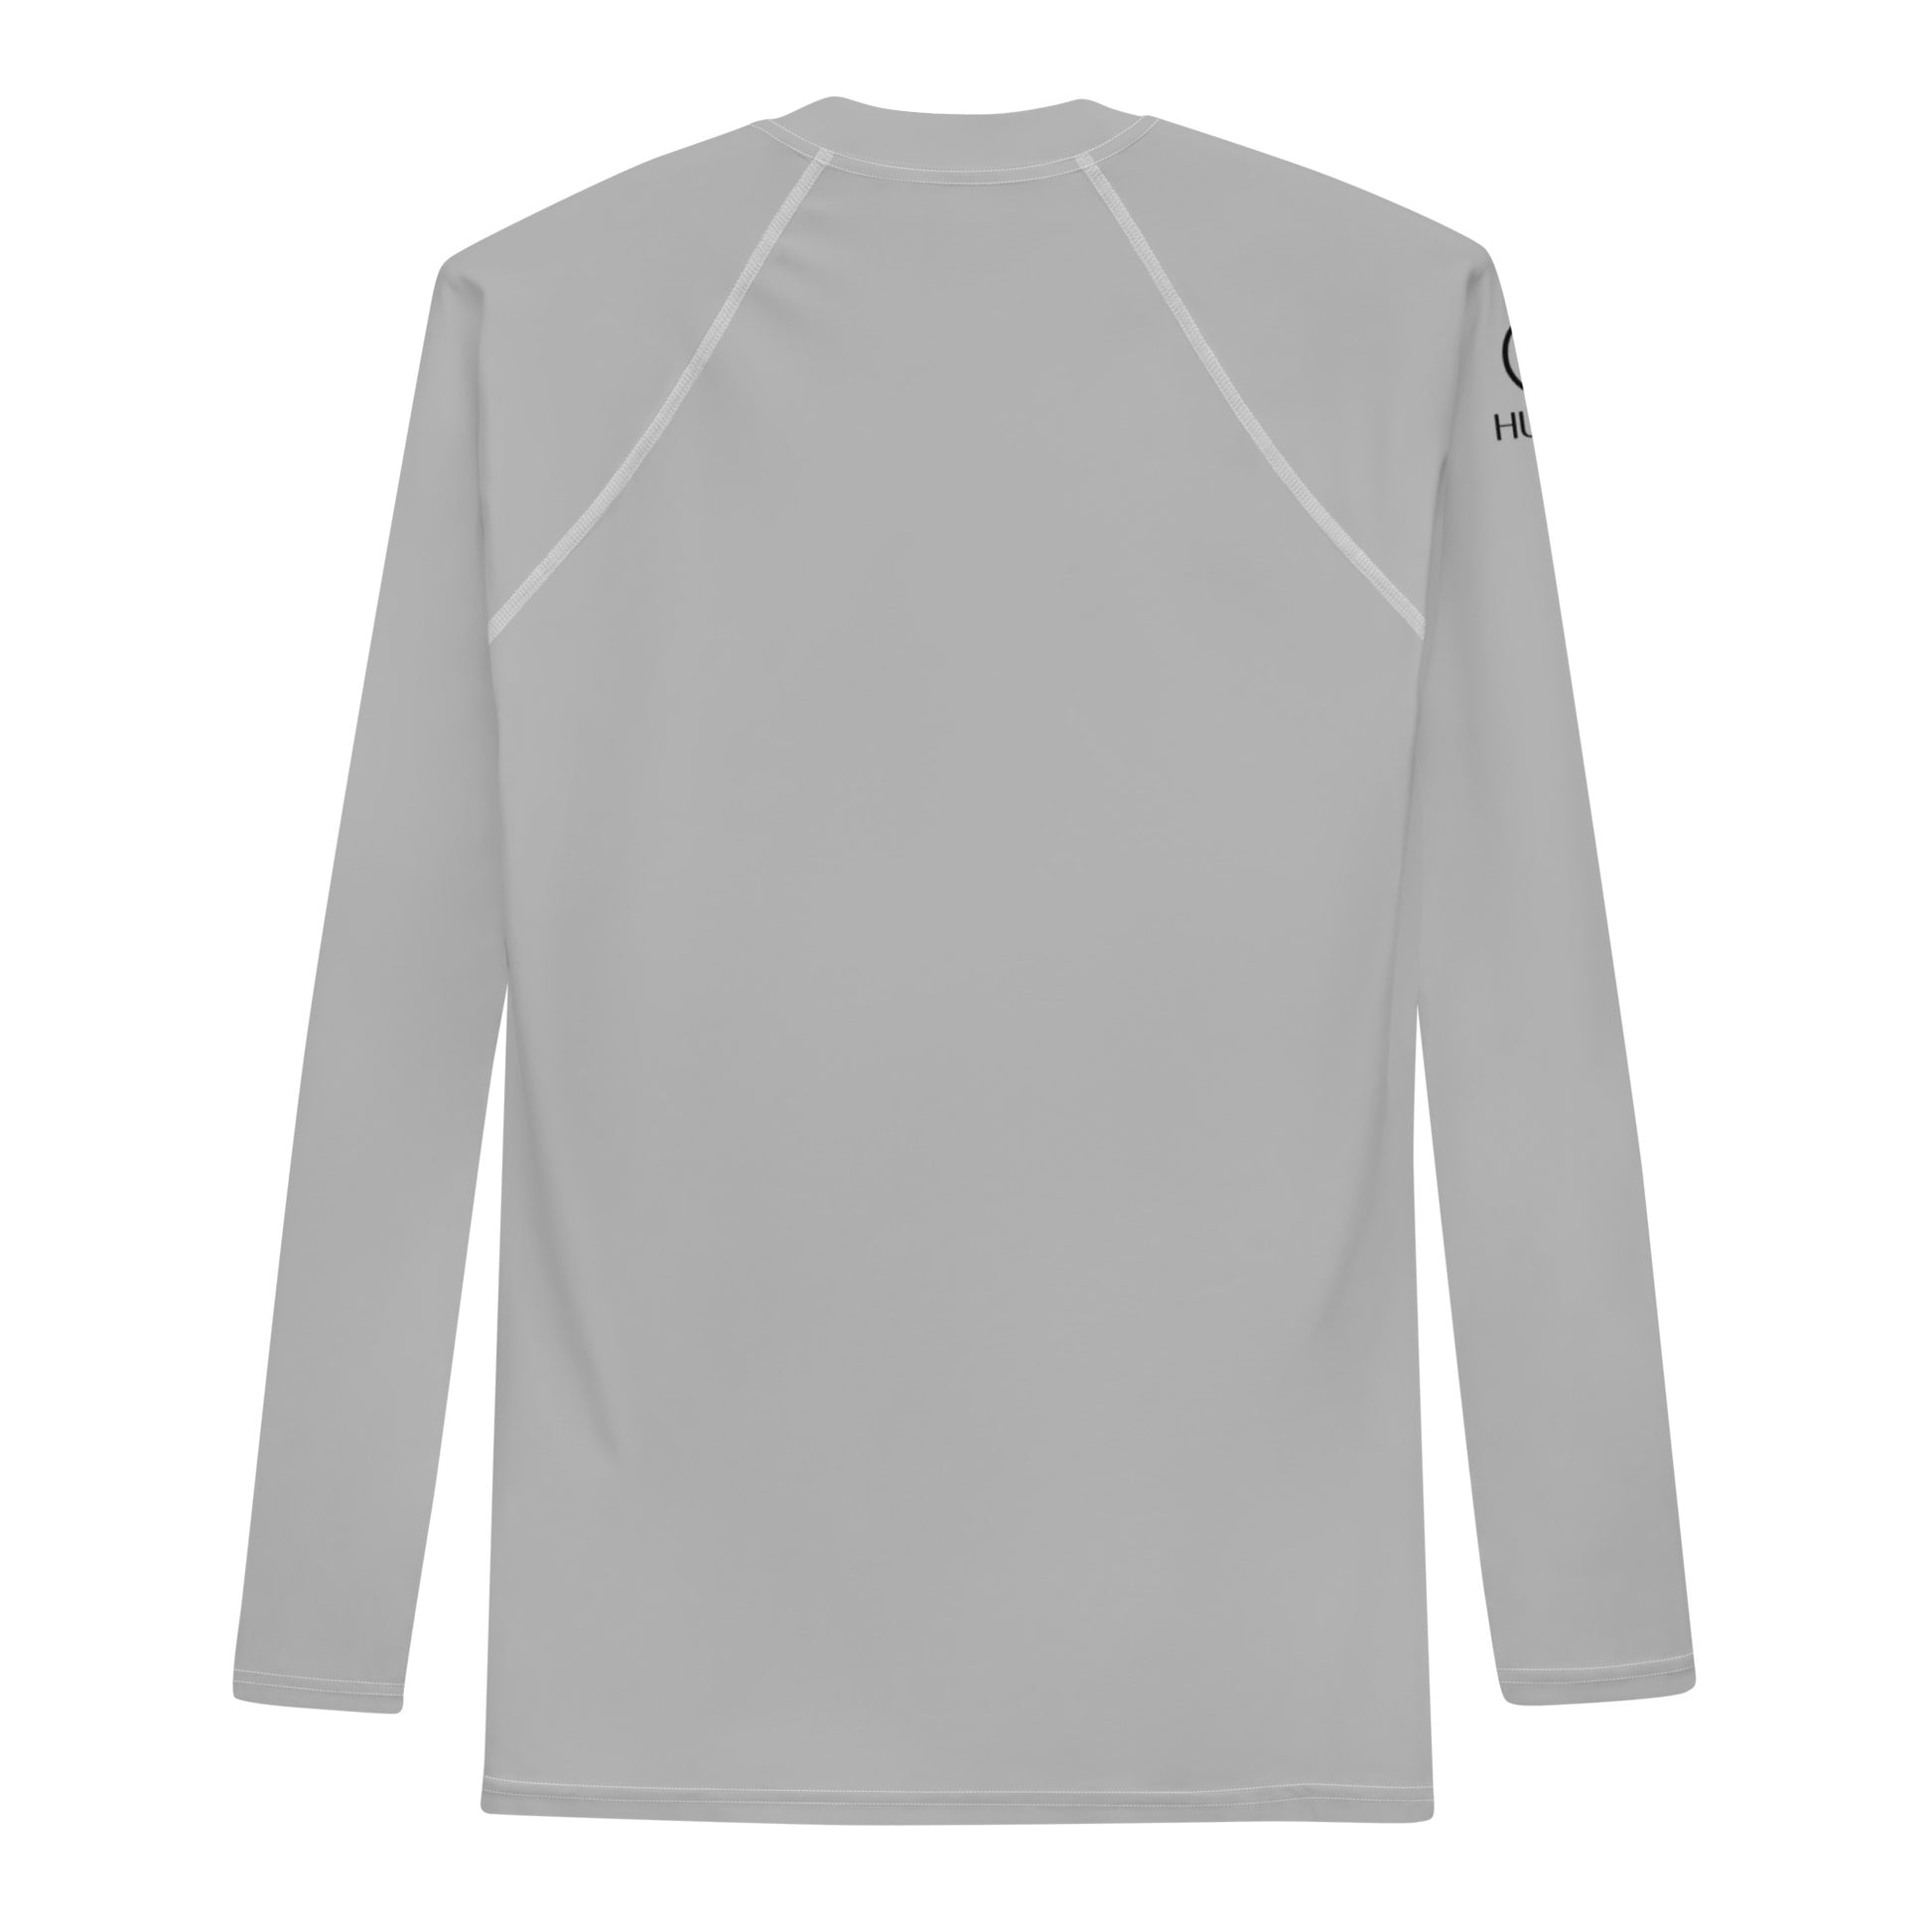 Humle Sportswear, men's color match long sleeve athletic rash guard 